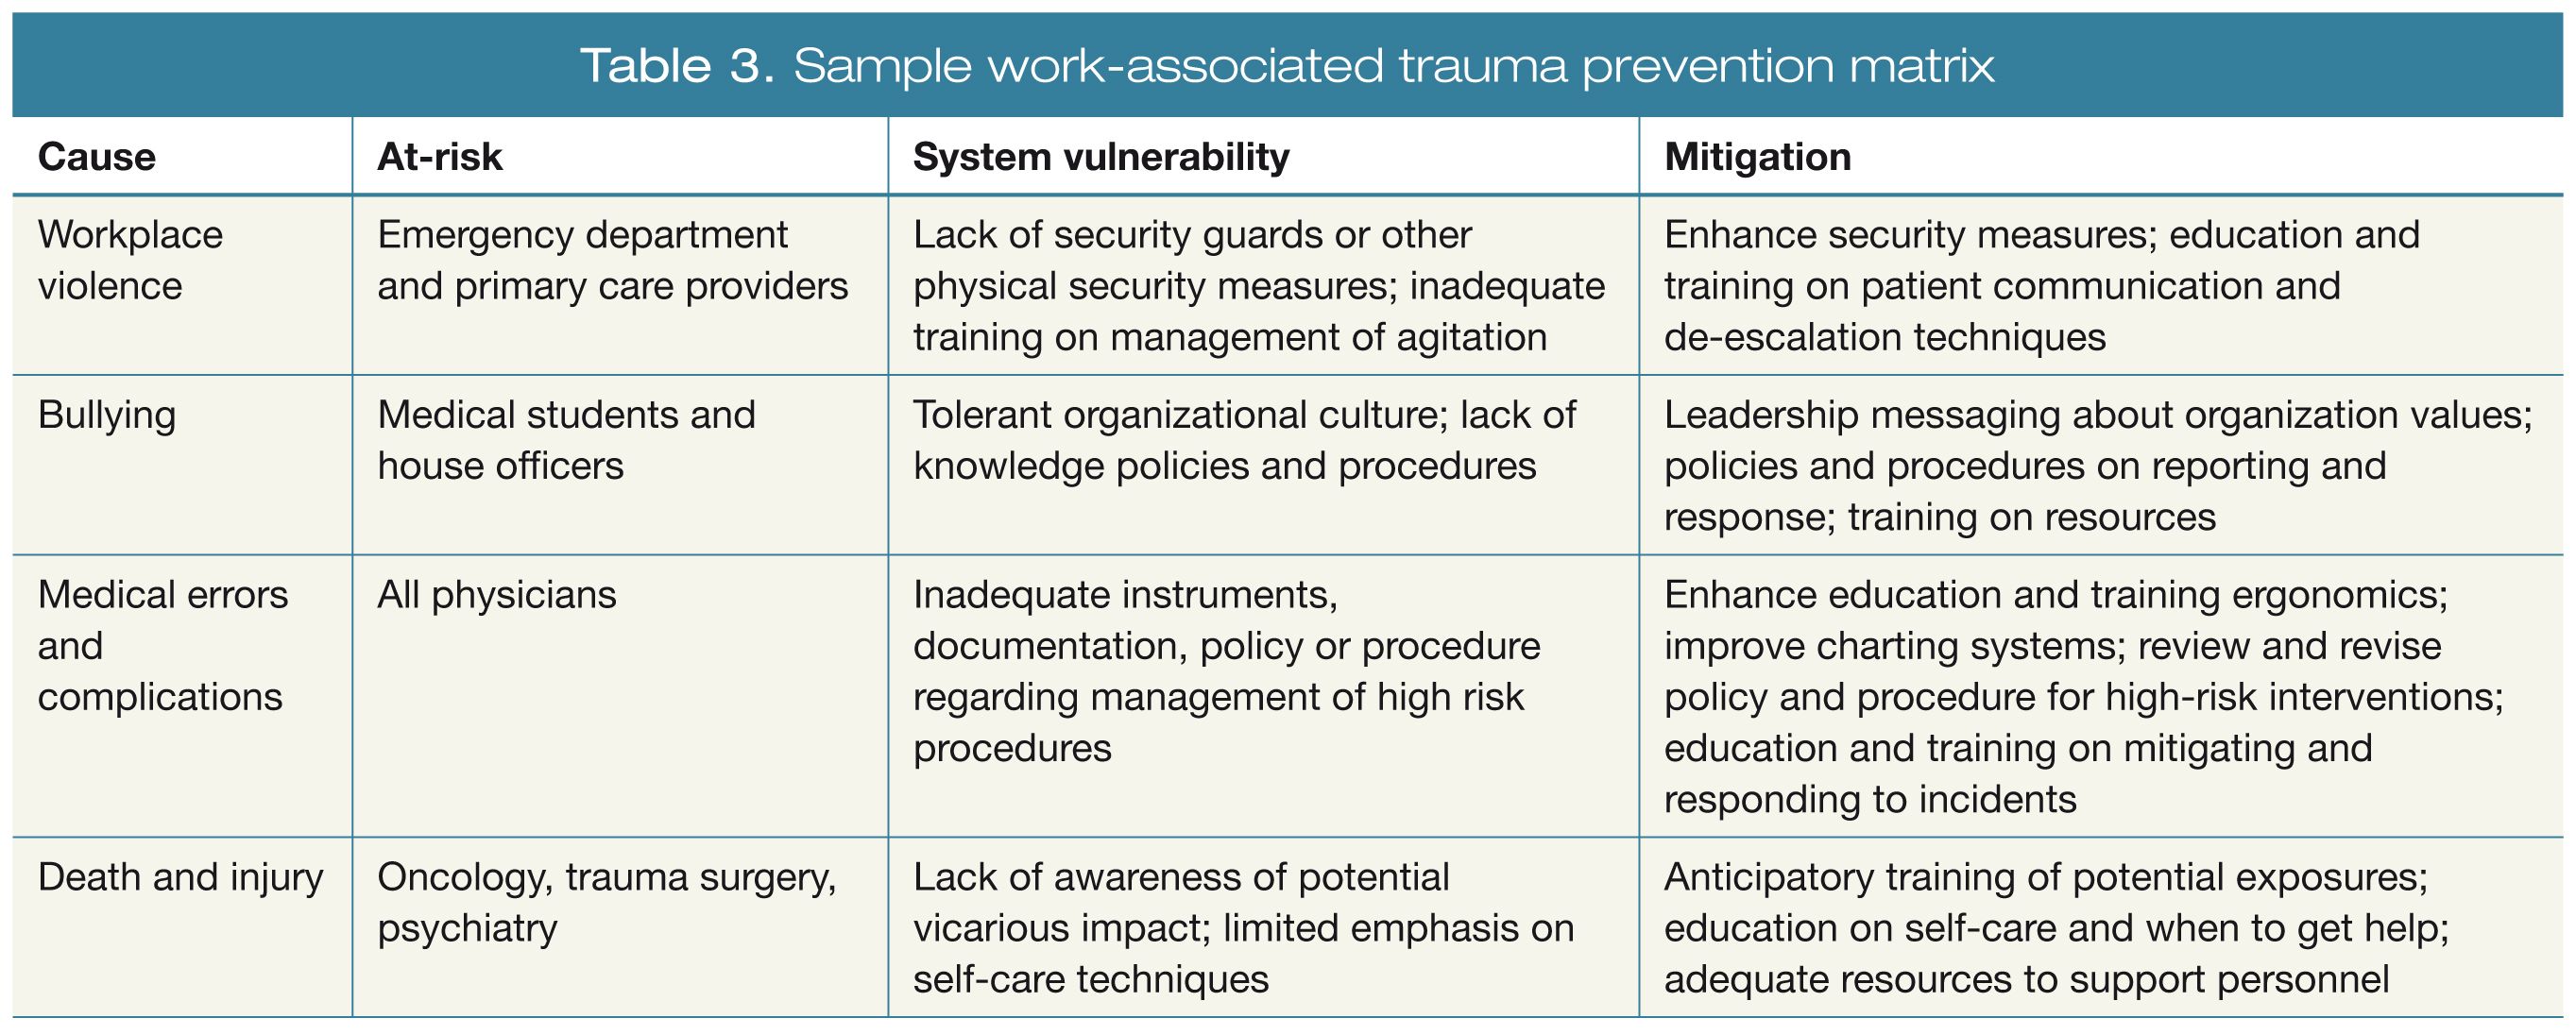 Sample work-associated trauma prevention matrix